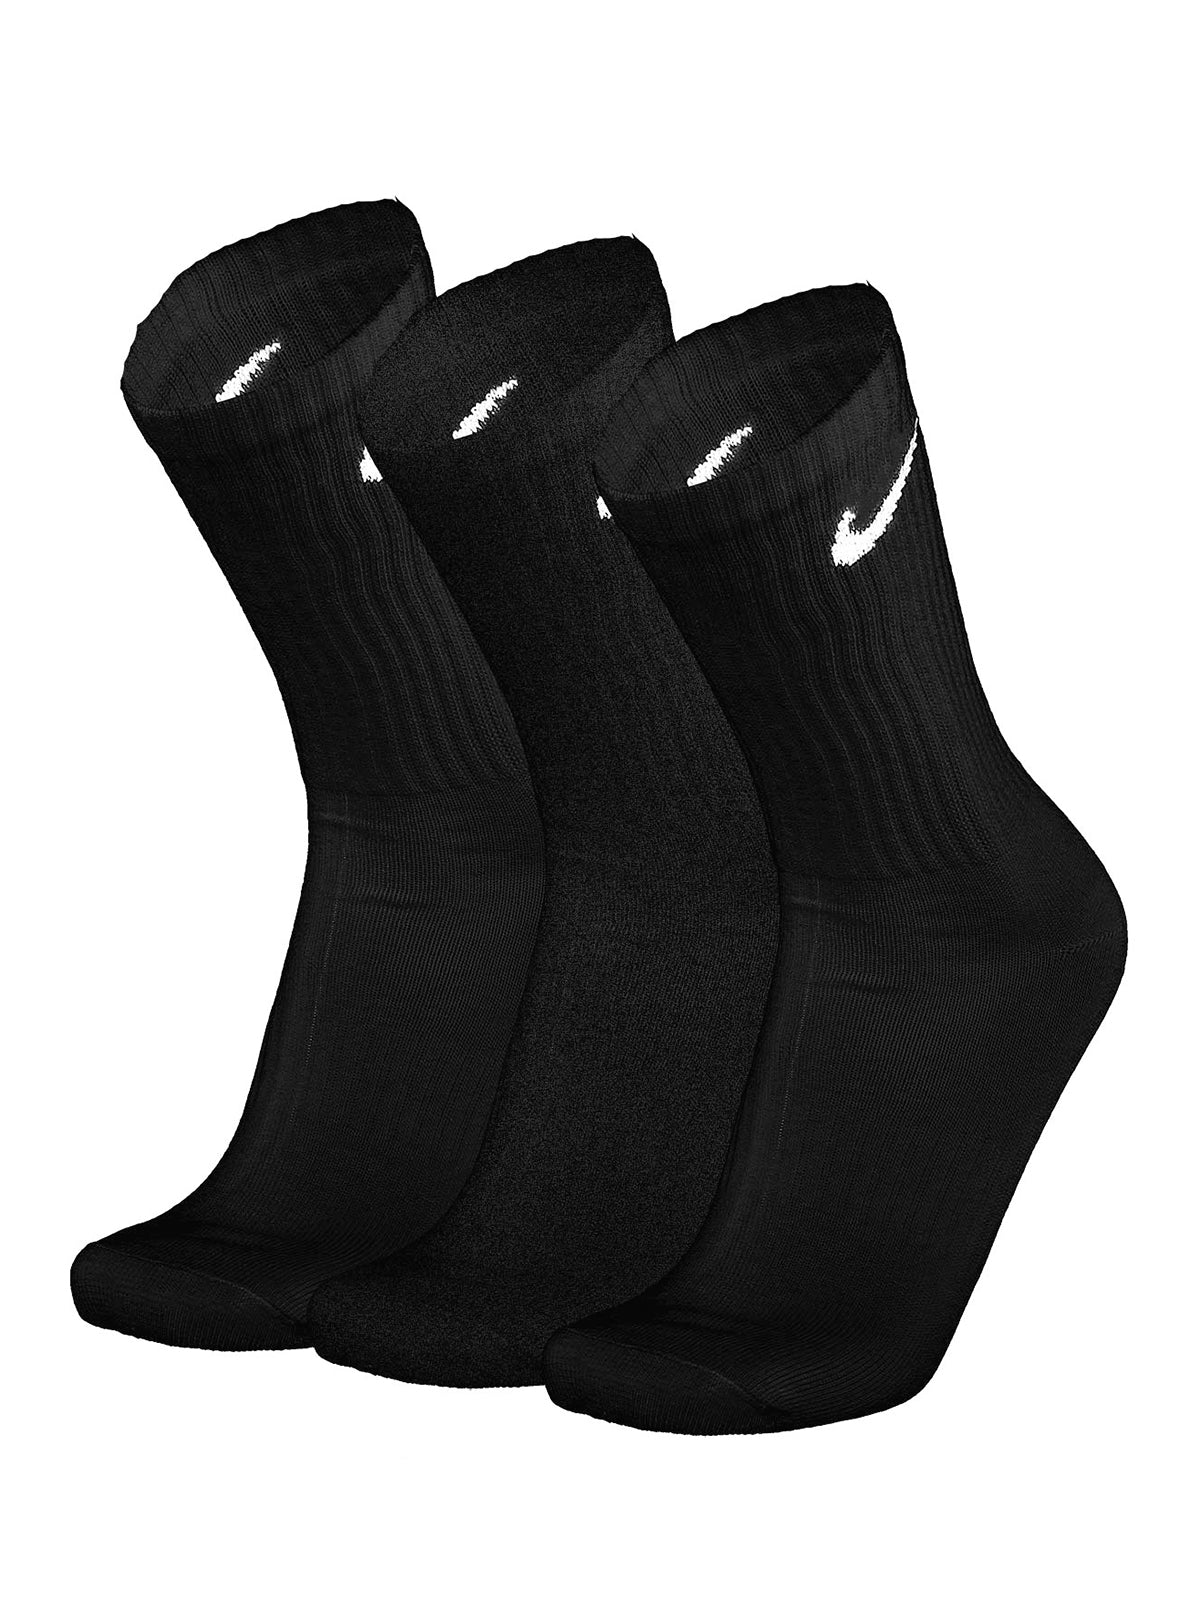 Calze Unisex Nike - Everyday Lightweight Crew Socks - 3 Pair - Nero